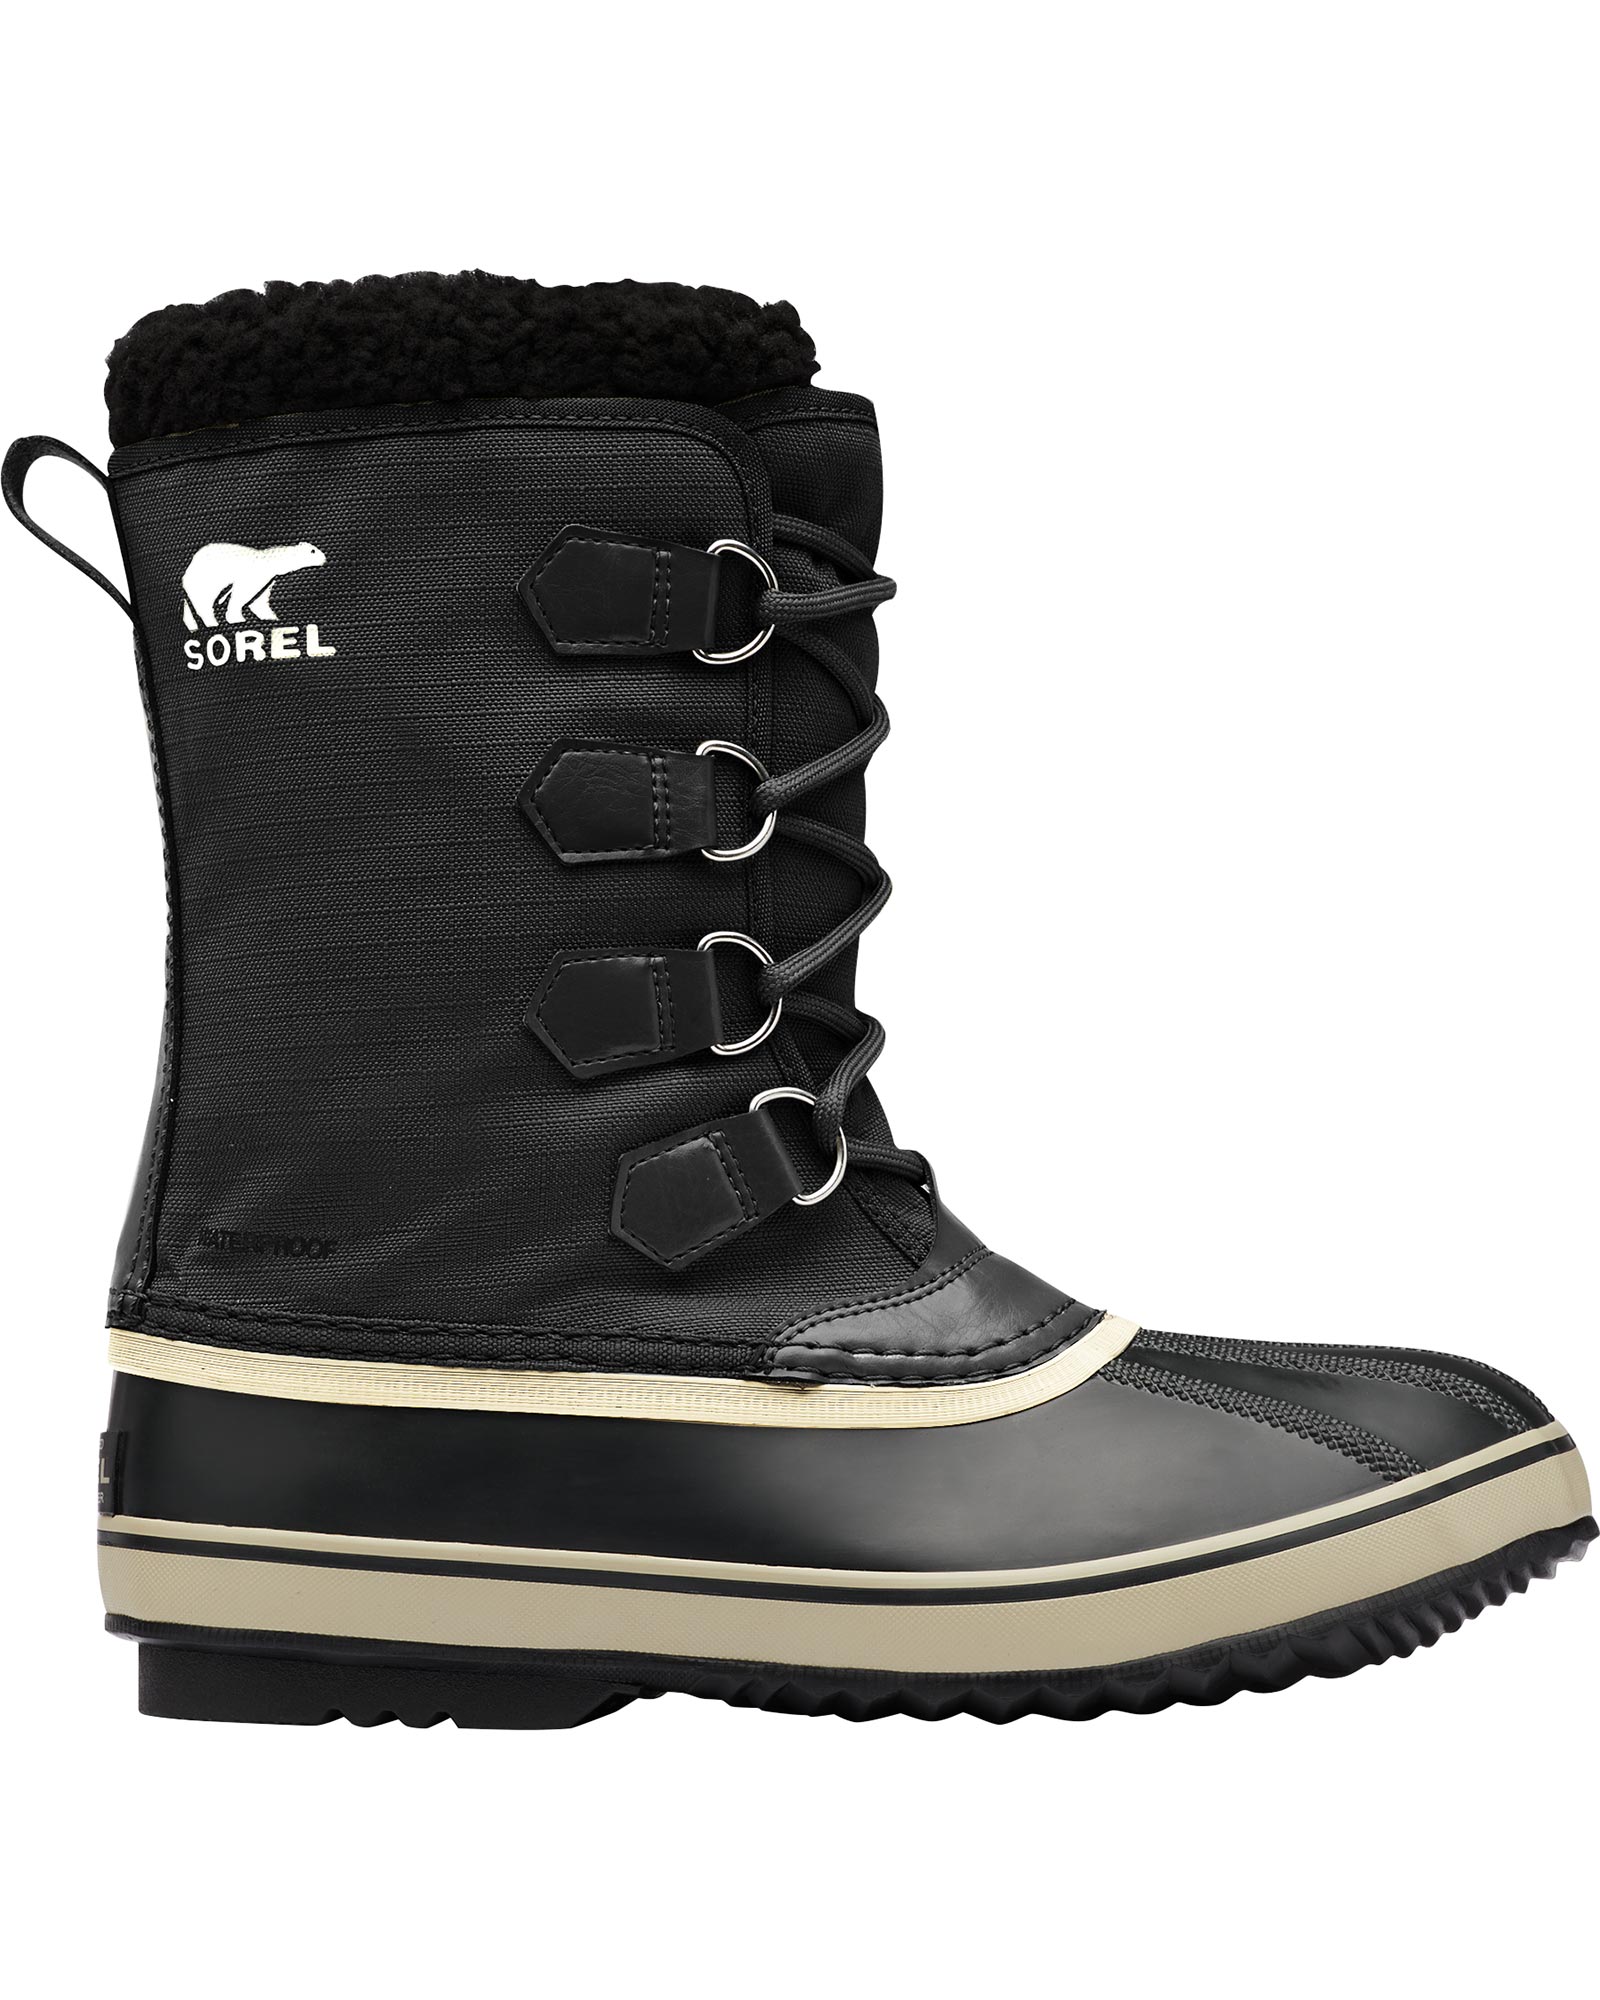 Sorel 1964 Pac Nylon Men’s Snow Boots - black UK 10